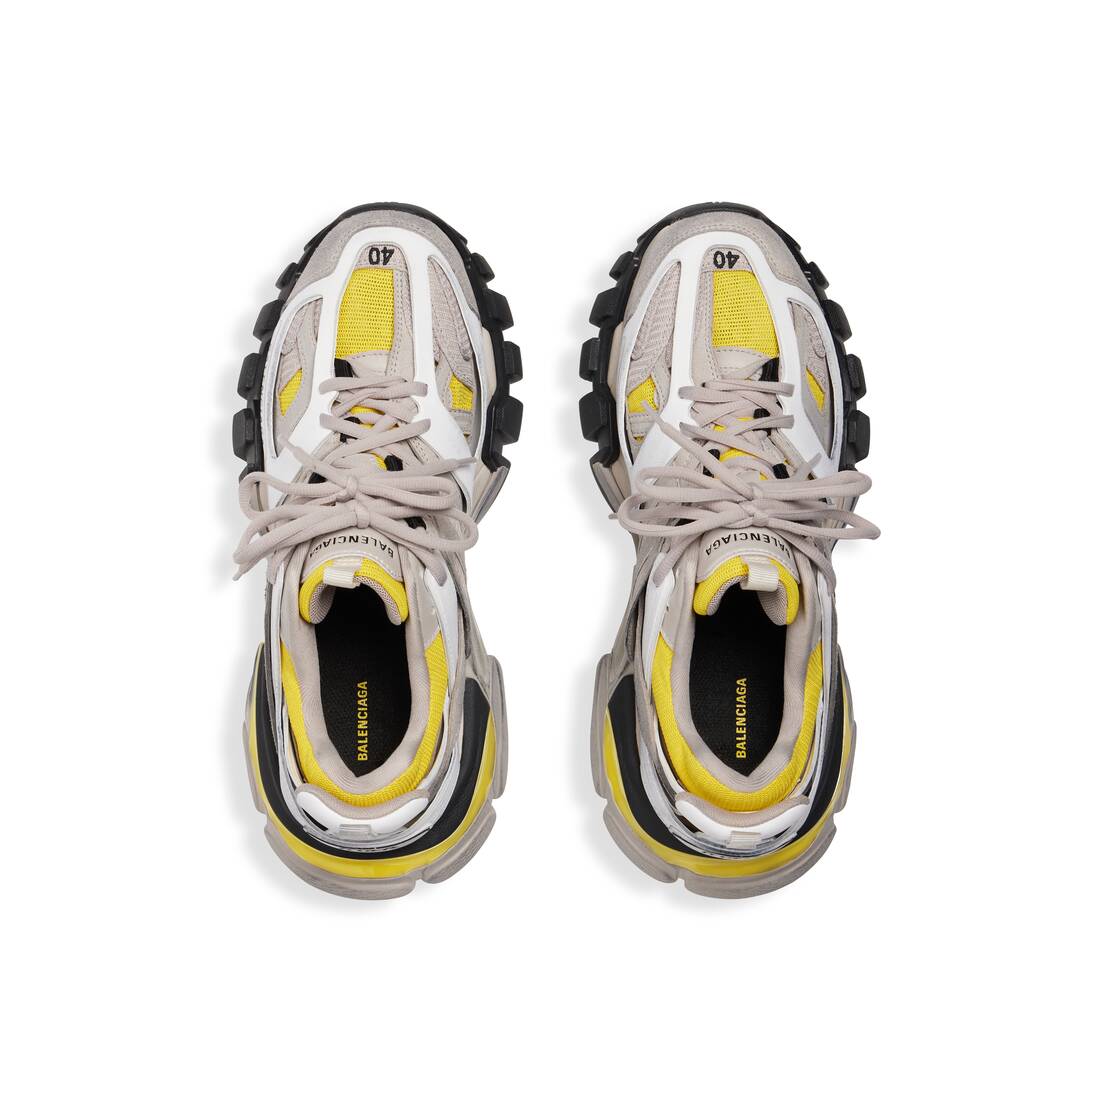 Men's Track Sneaker in Yellow/white/beige/grey/black